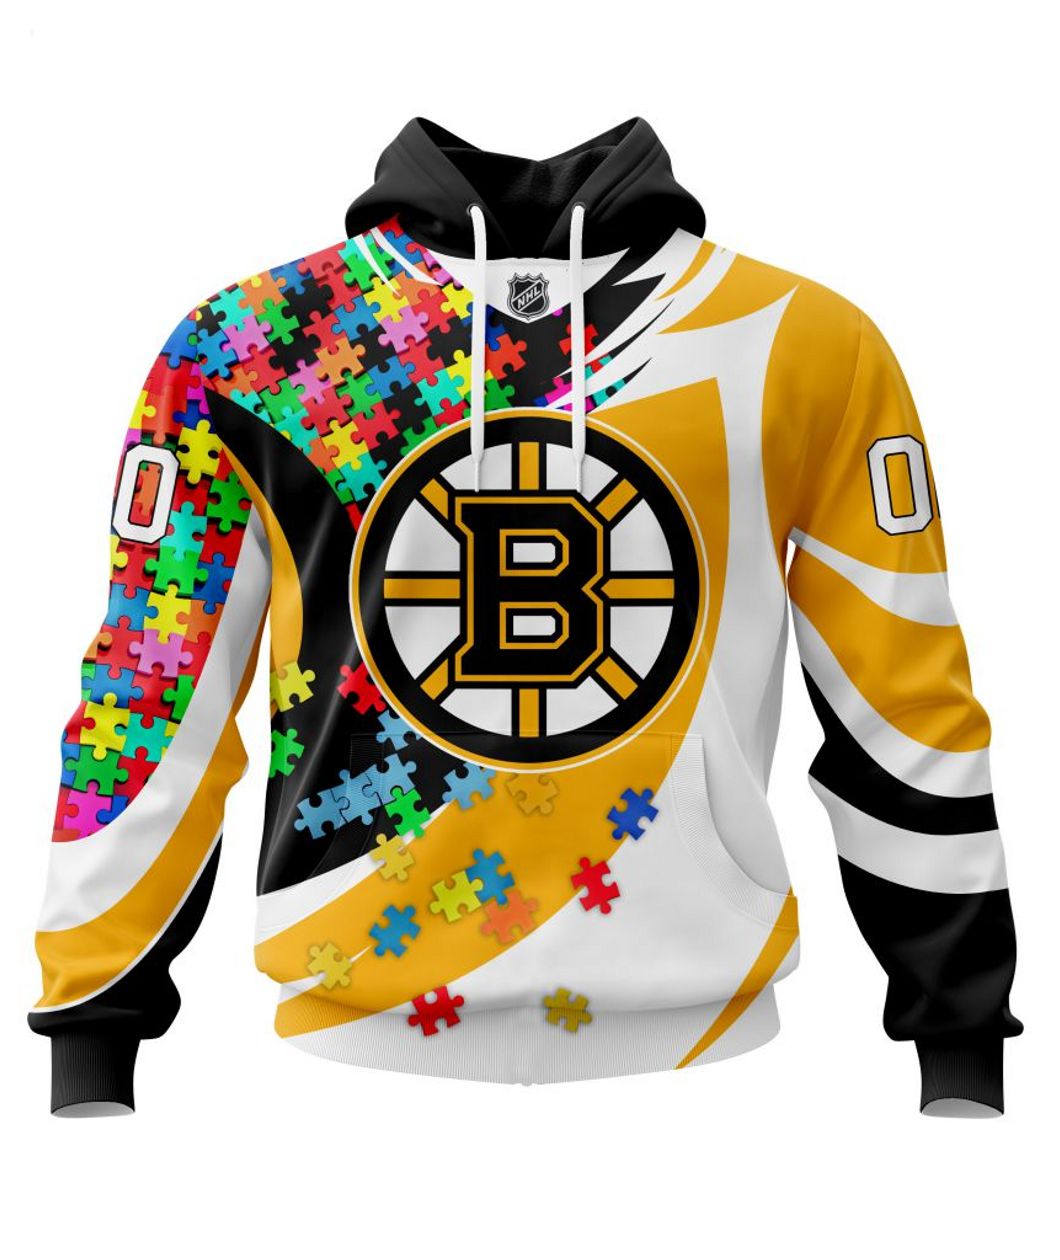 Personalized NHL Boston Bruins Apparel 2021 Concepts Kits - Torunstyle